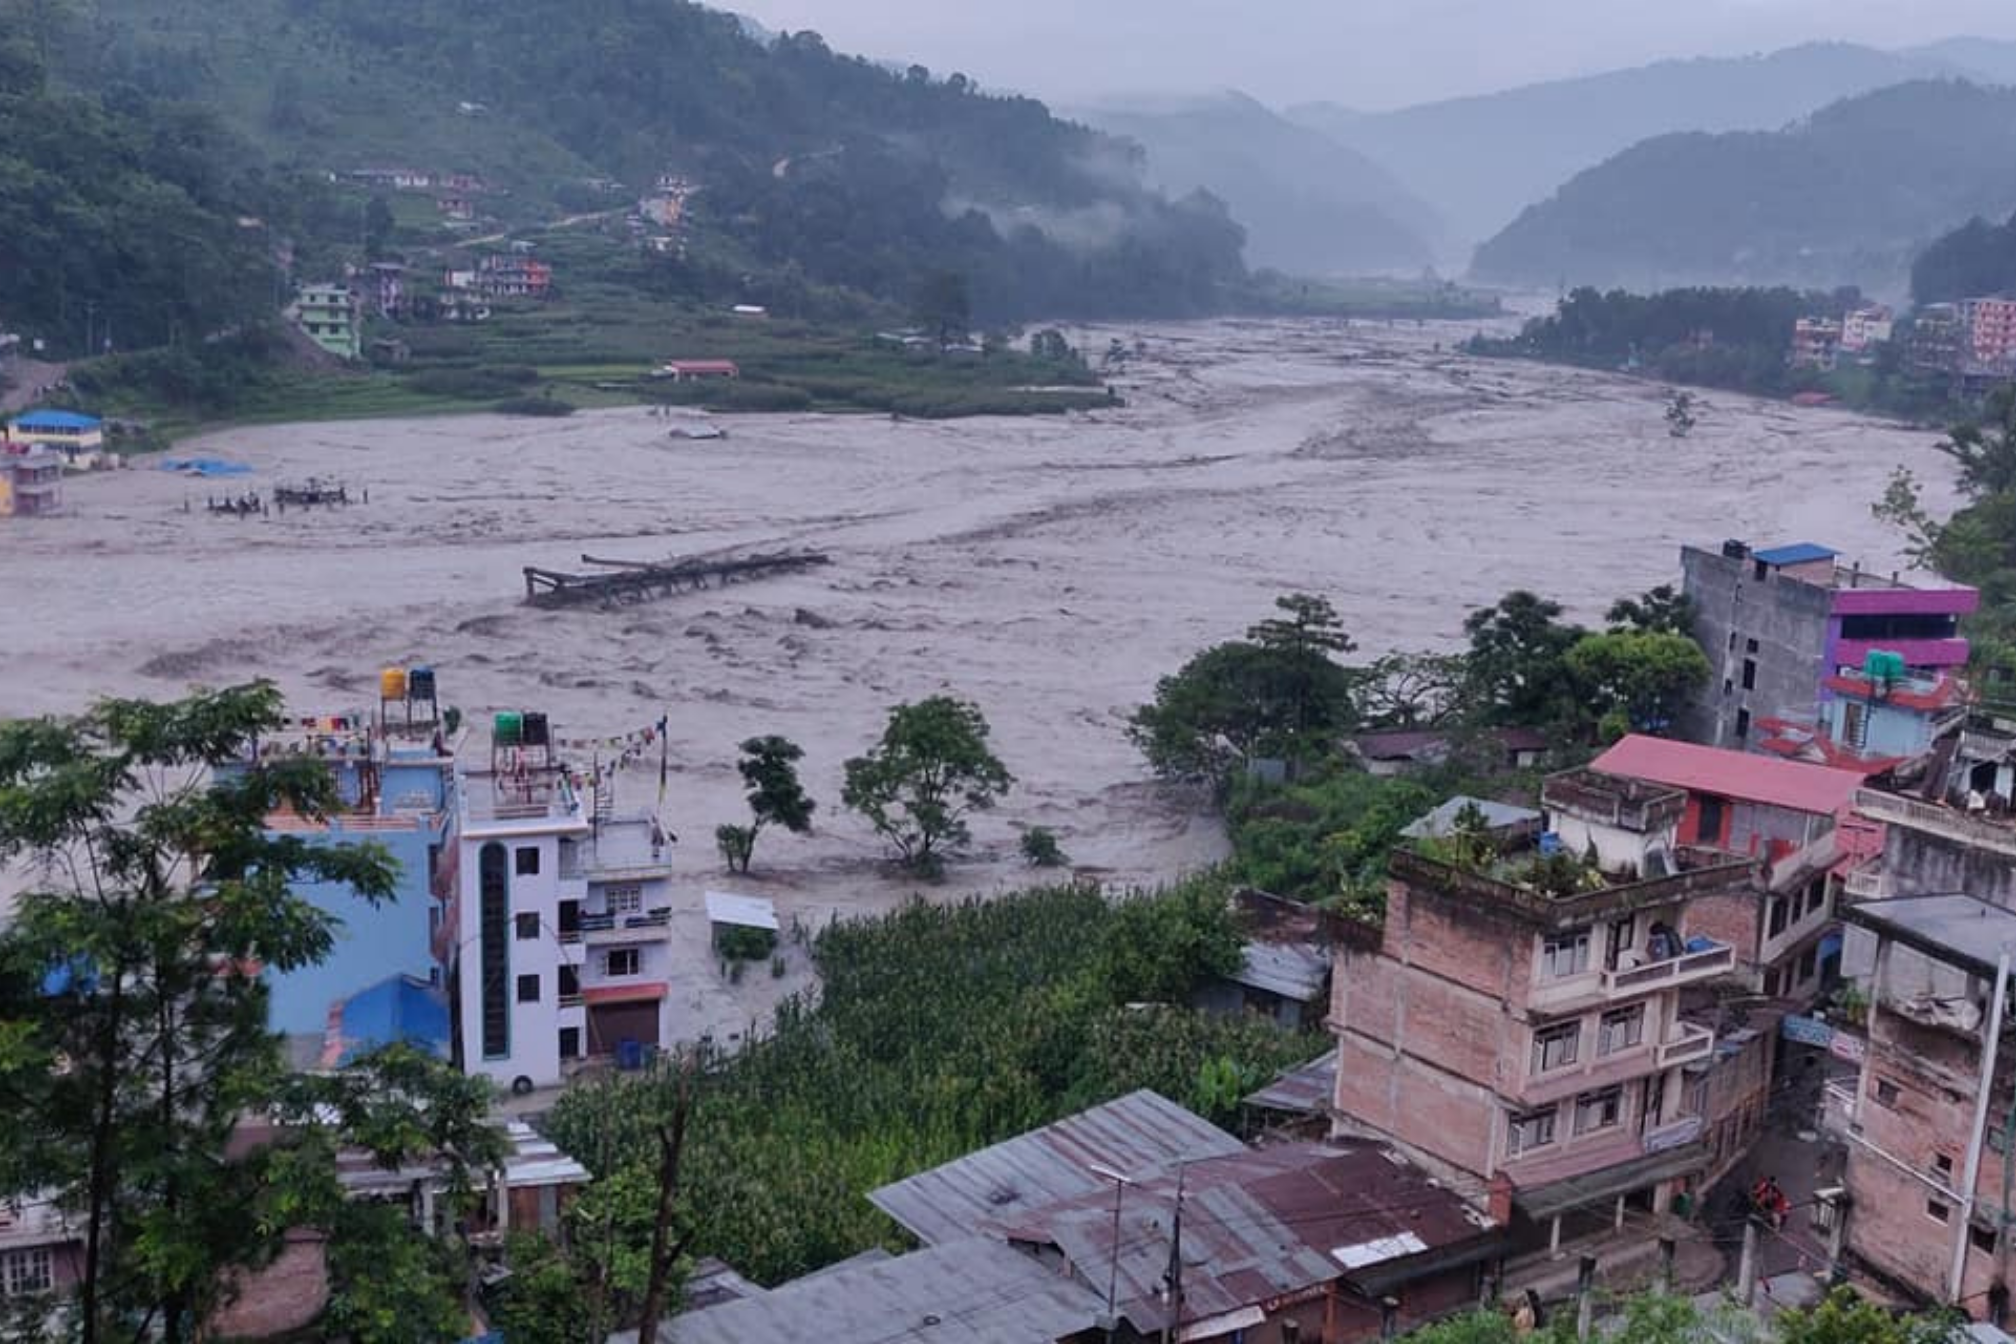 Flash flood indundates the Yangri Valley, taking Himalayan Life's school, The Yangri Academic Centre, with it.